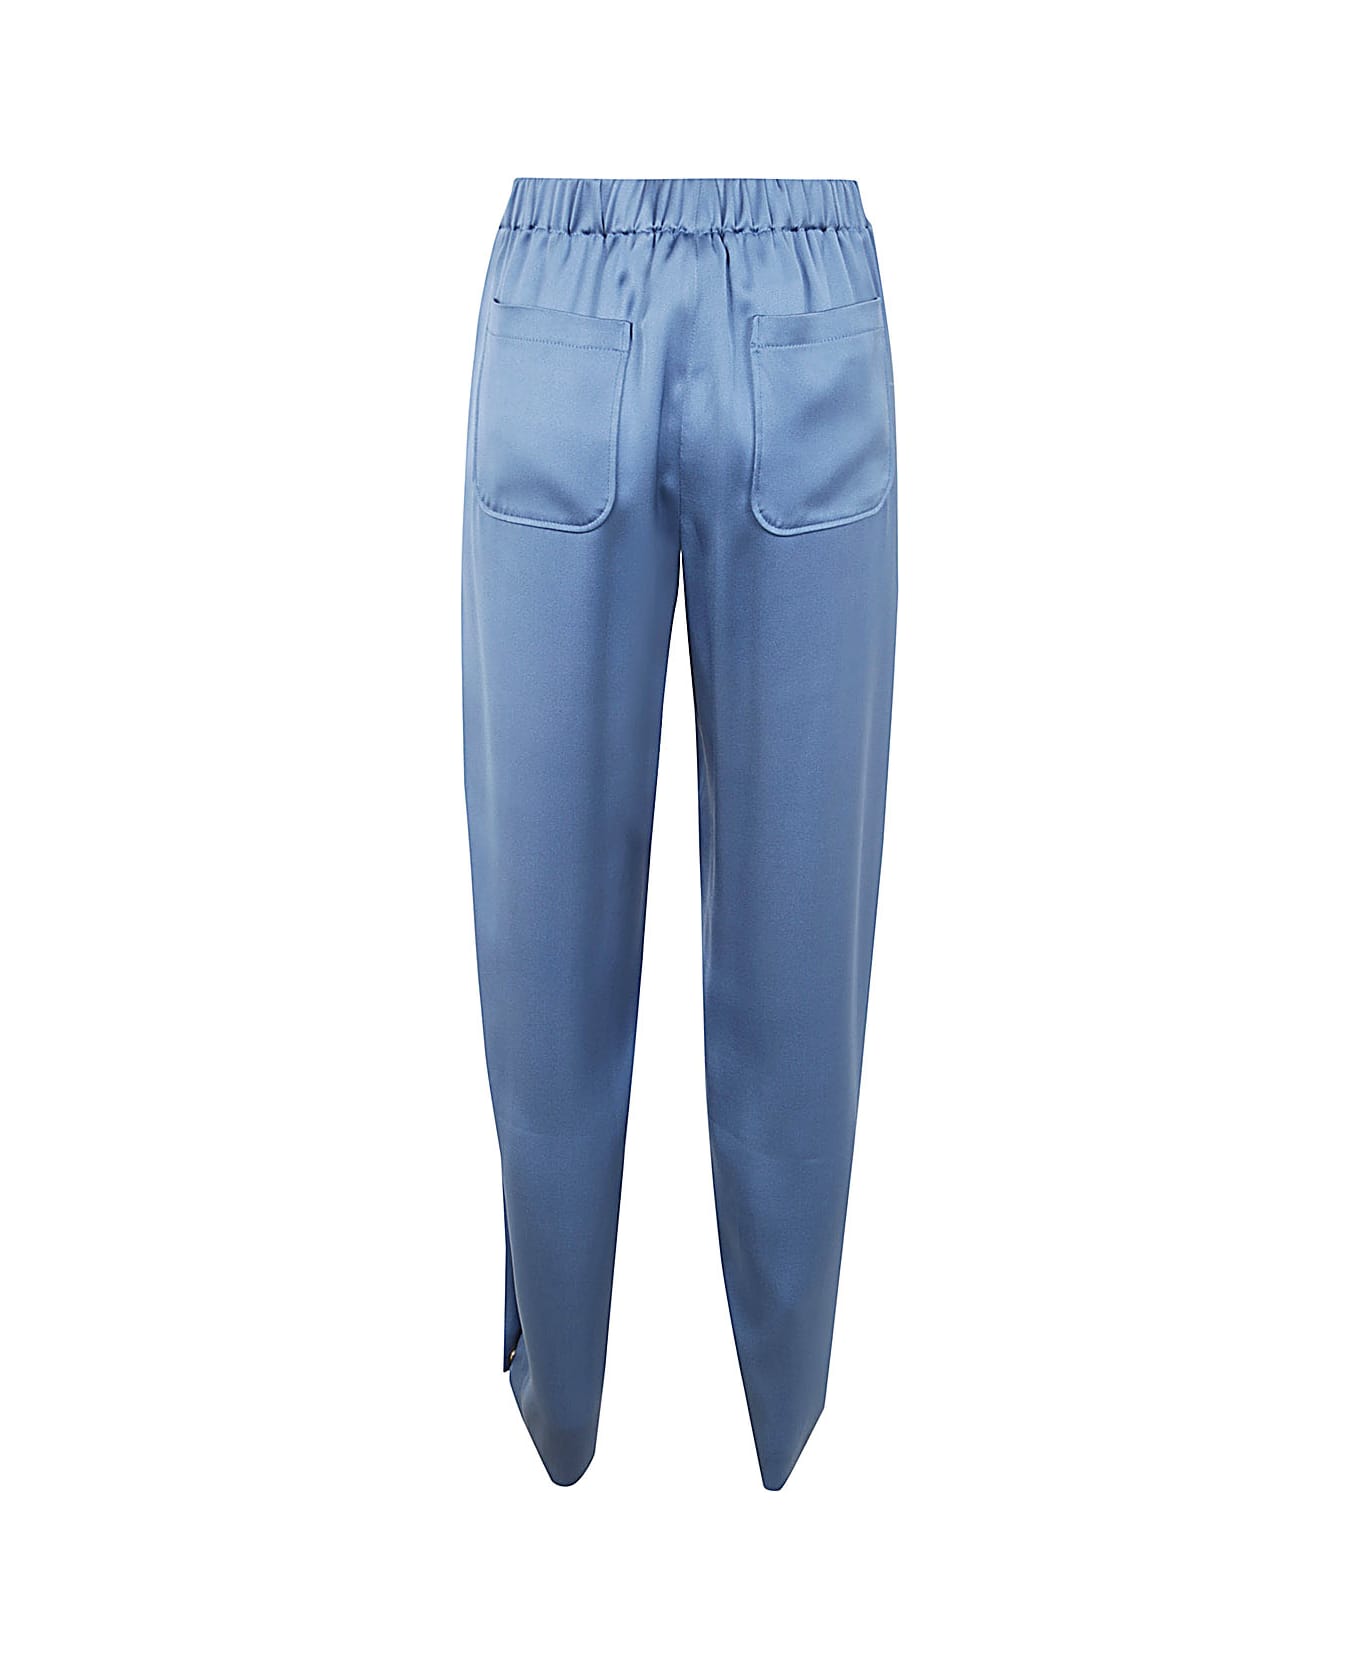 Giorgio Armani Elastic Waist Pants With Button On Bottom - Avio Blue ボトムス